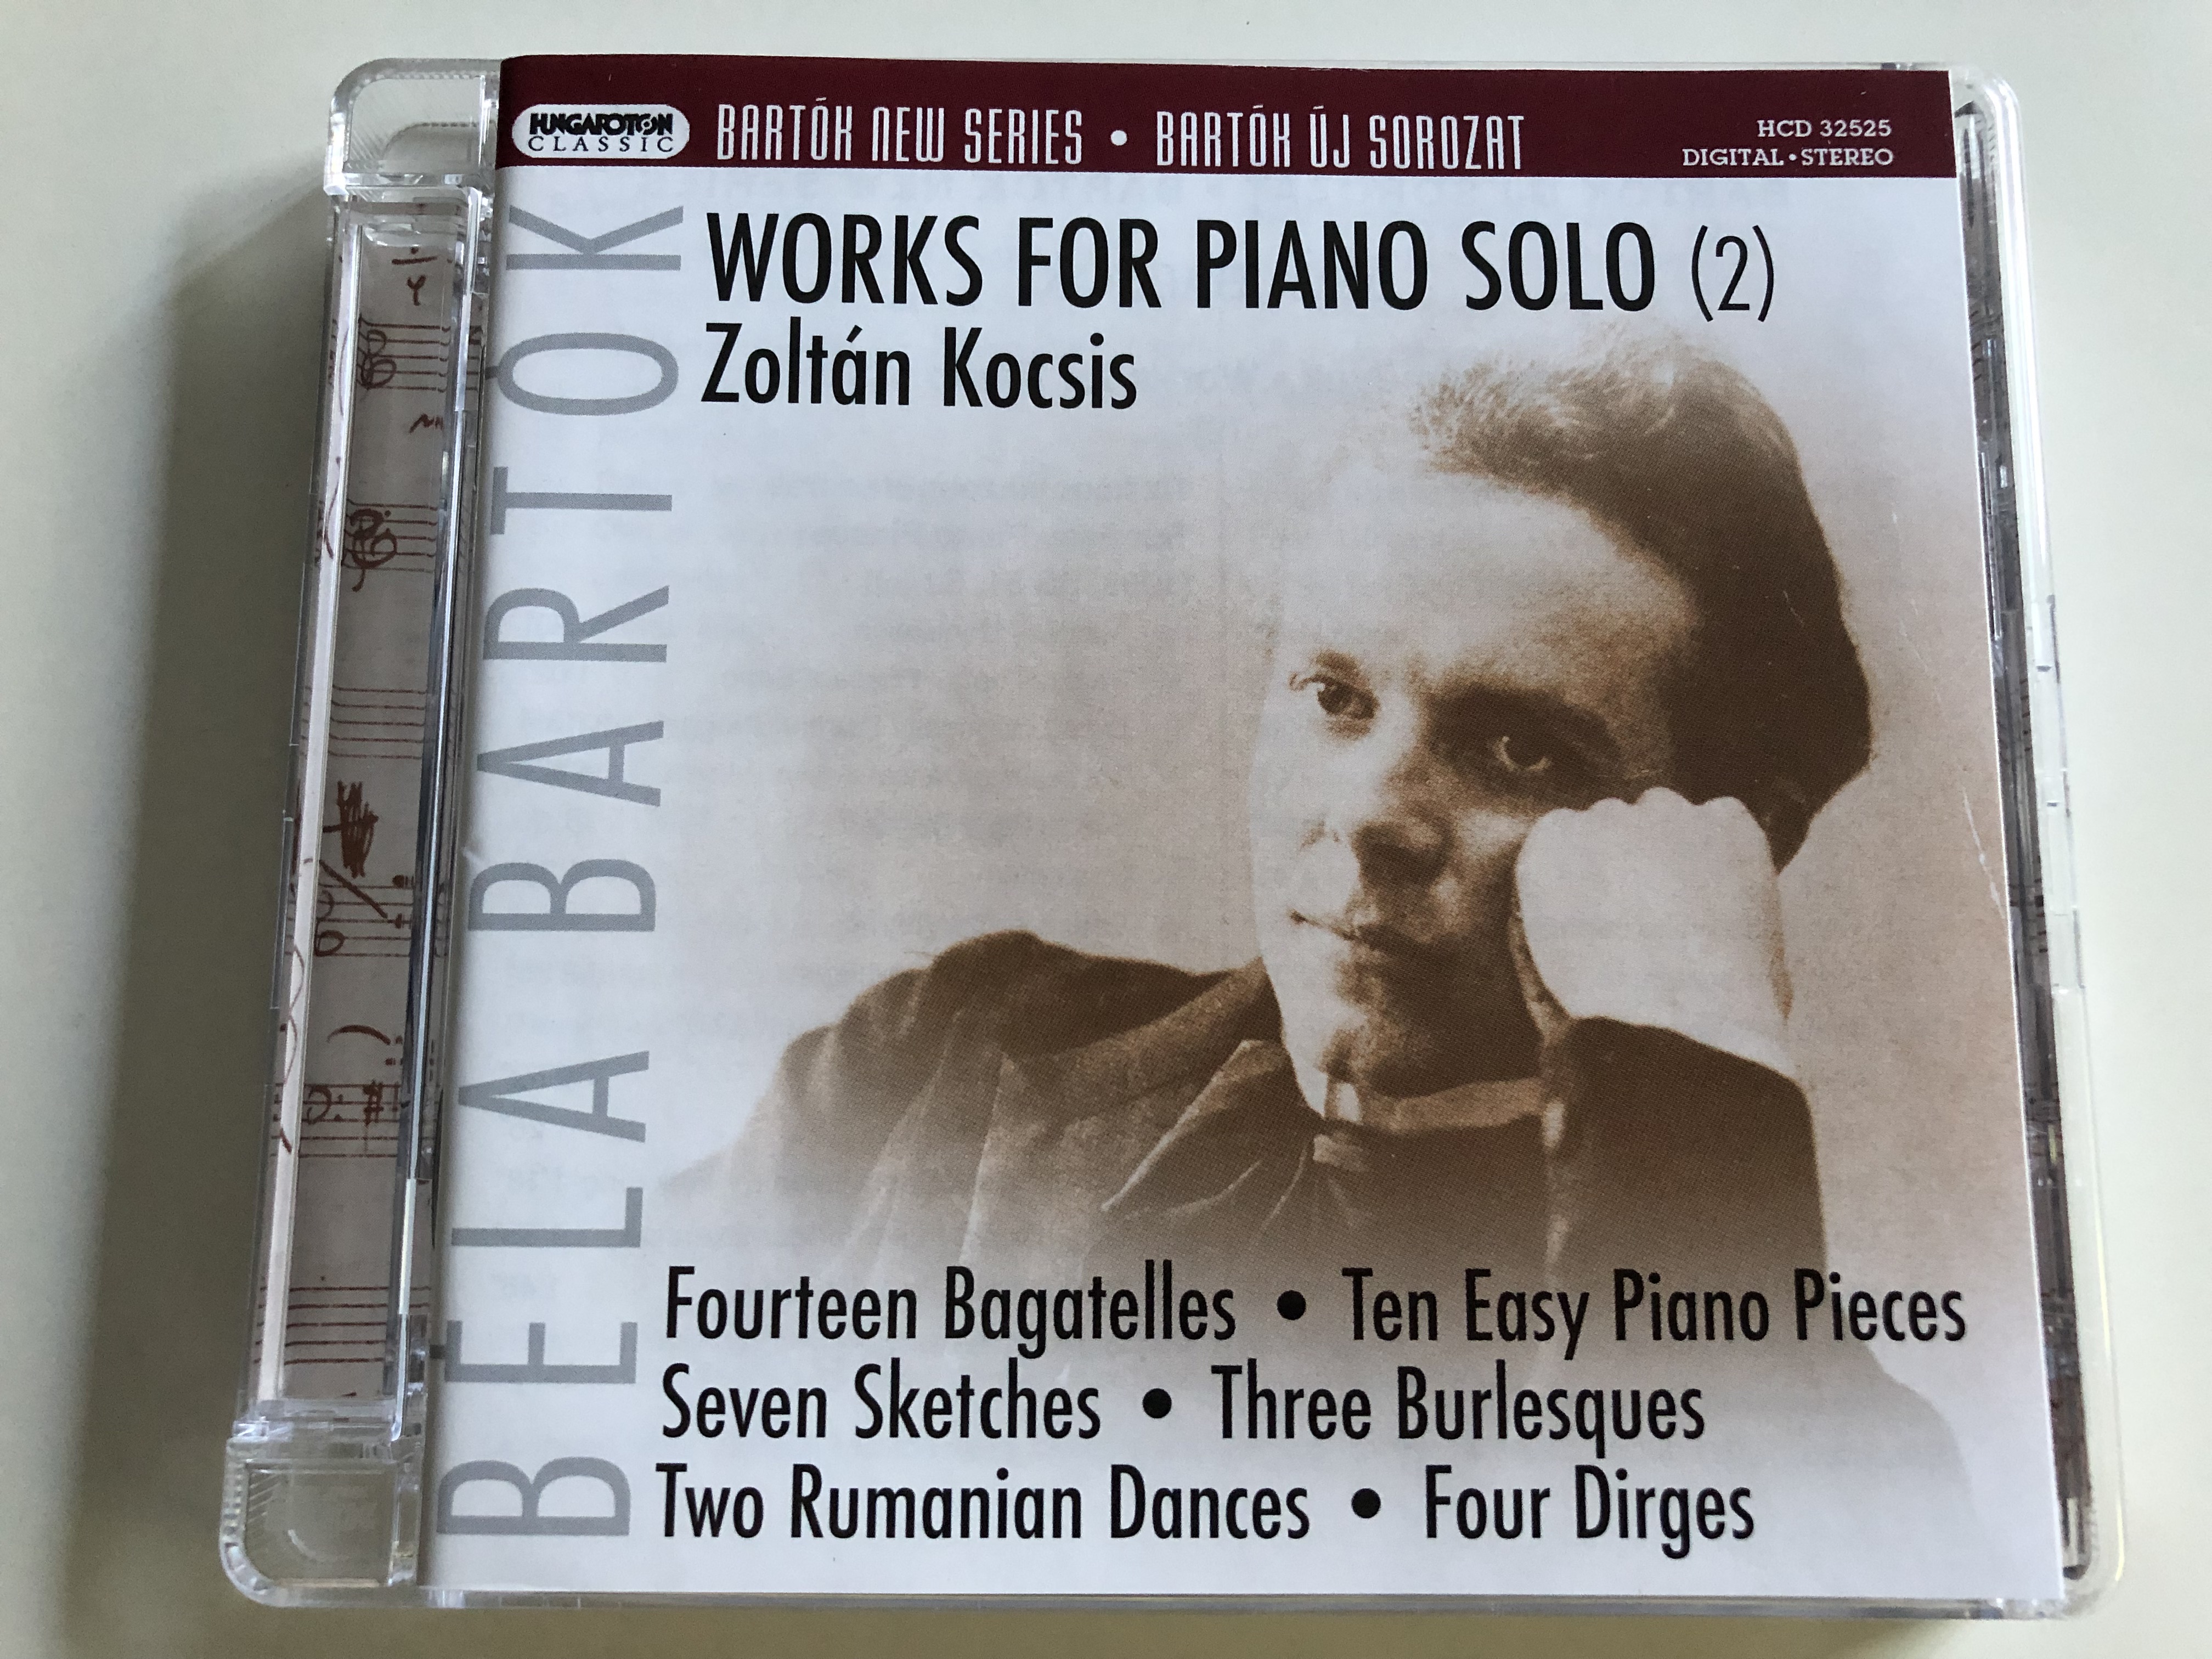 b-la-bart-k-works-for-piano-solo-2-zolt-n-kocsis-fourteen-bagatelles-ten-easy-piano-pieces-seven-sketches-three-burlesques-two-romanian-dances-four-dirges-hungaroton-audio-cd-2007-hcd-32525-.jpg